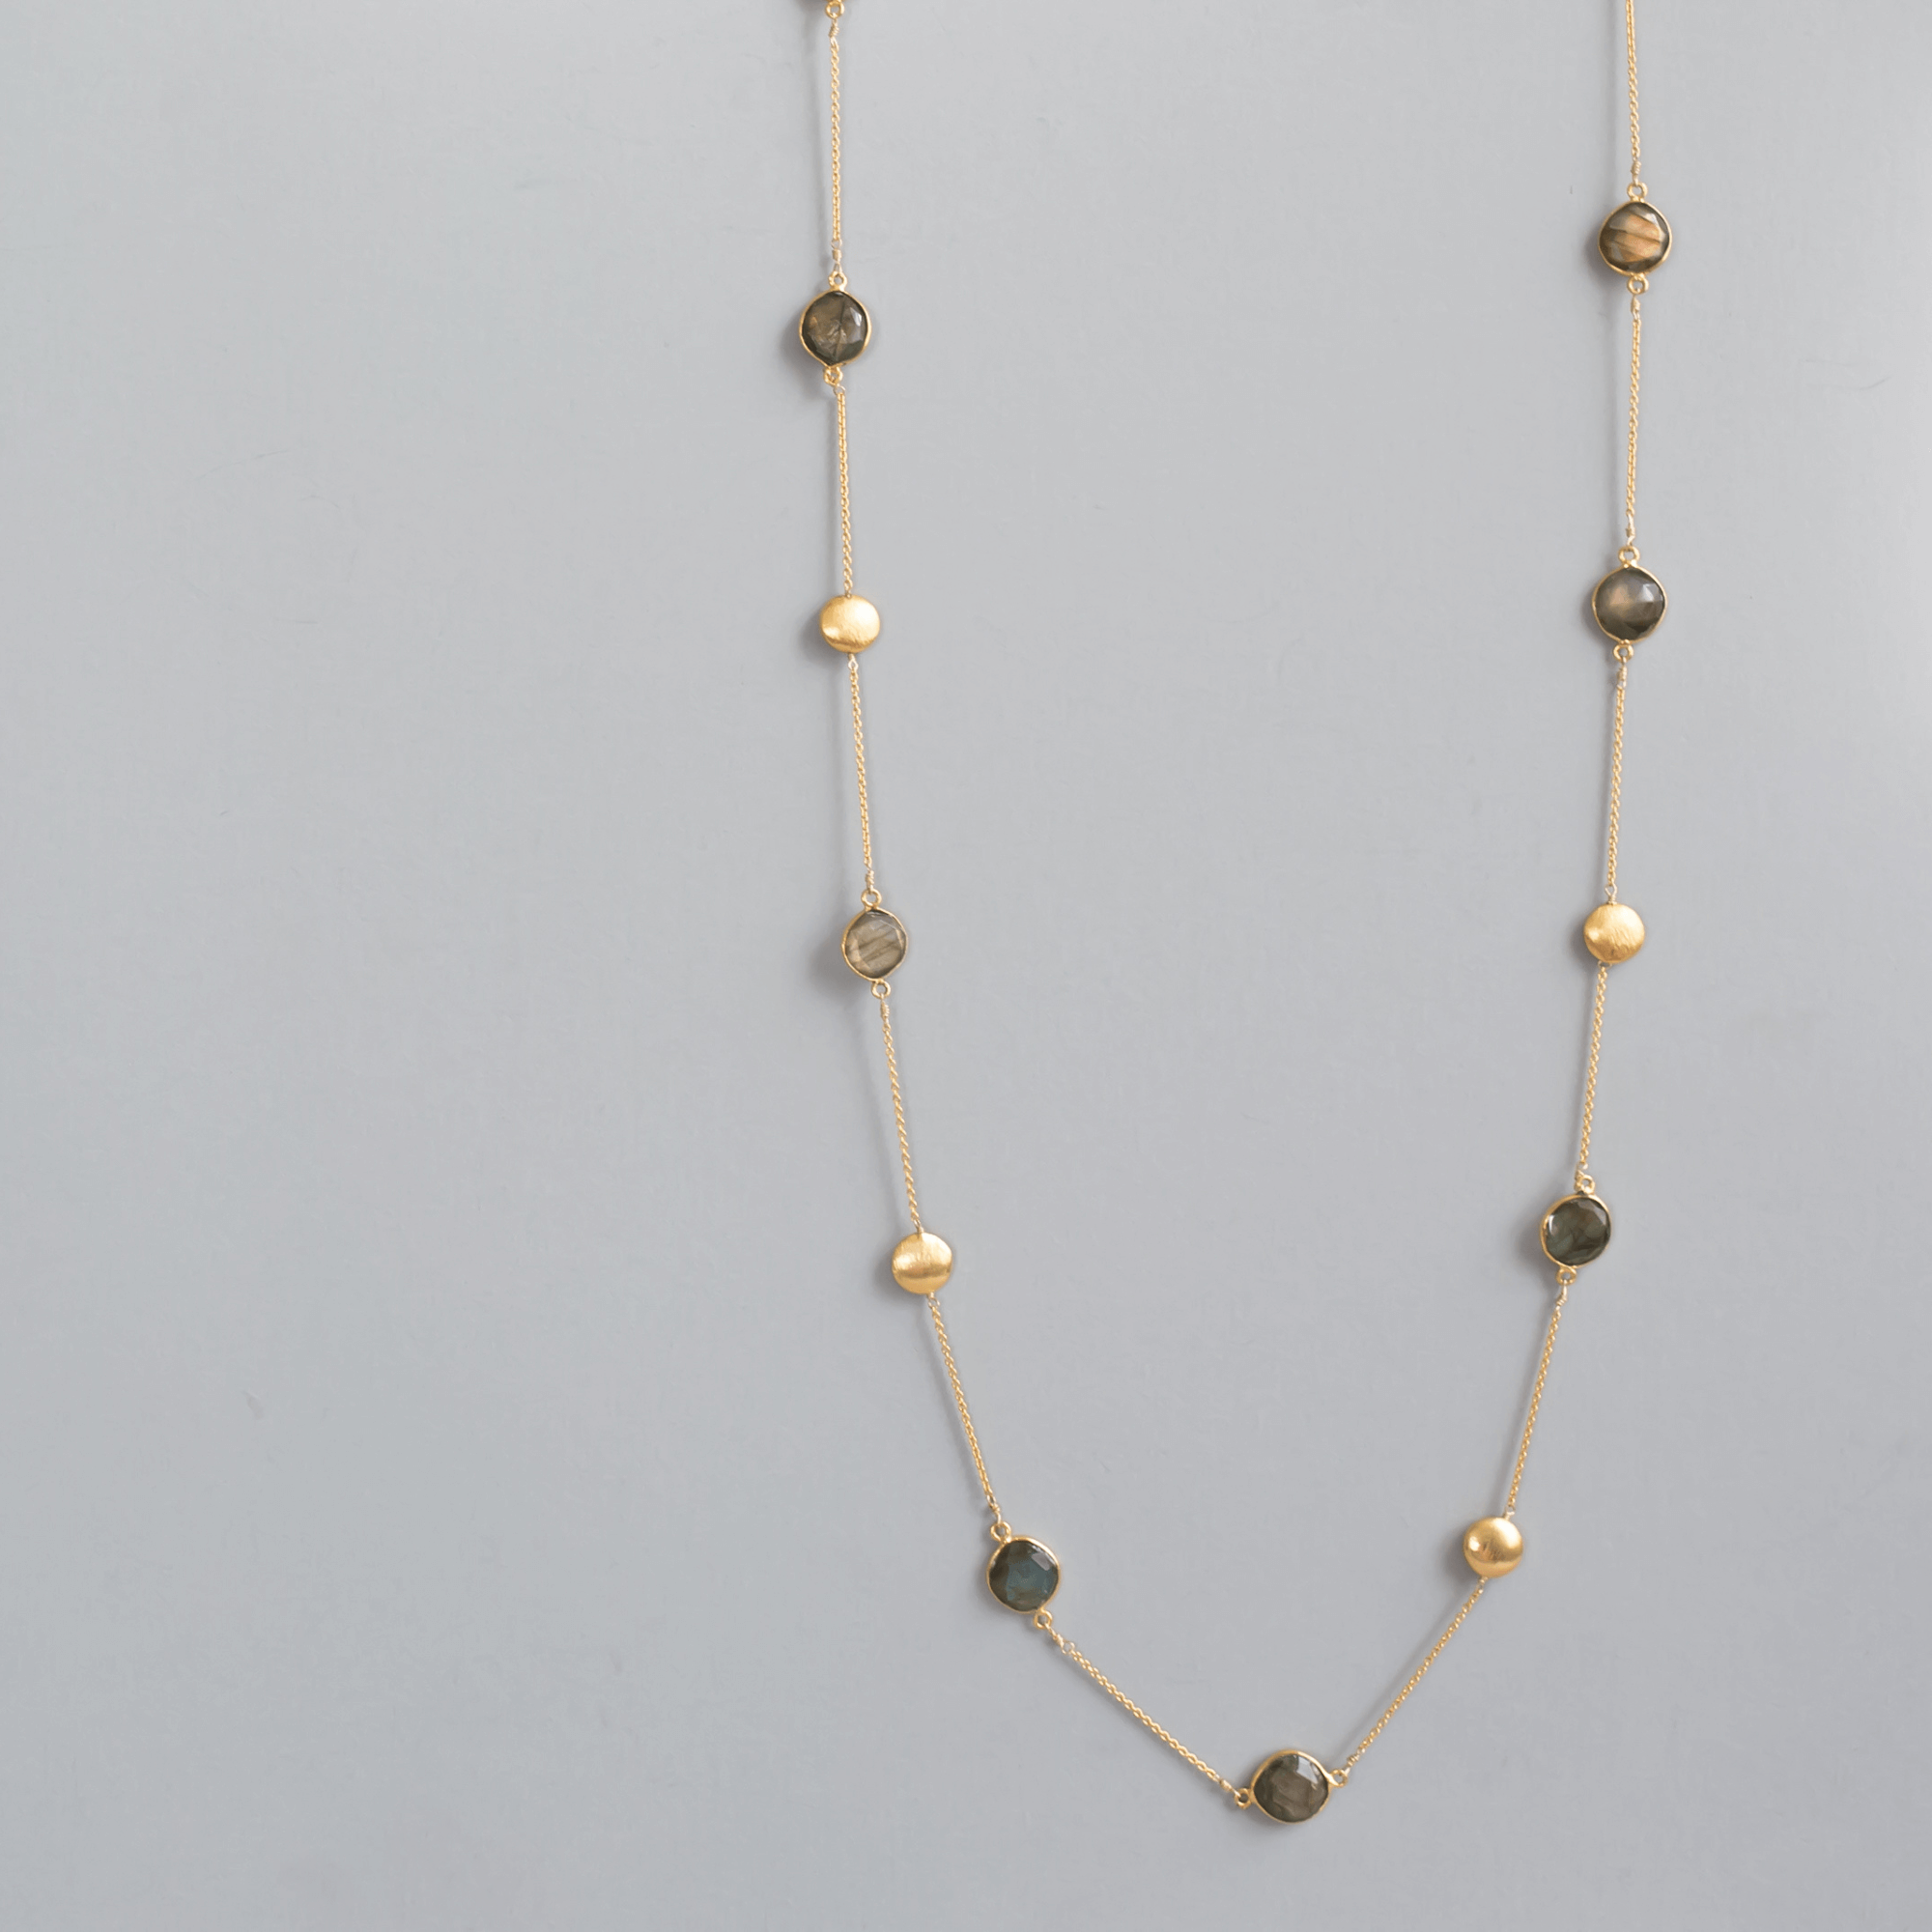 Unique Gold with Versatile Labradorite gemstones Long Chain